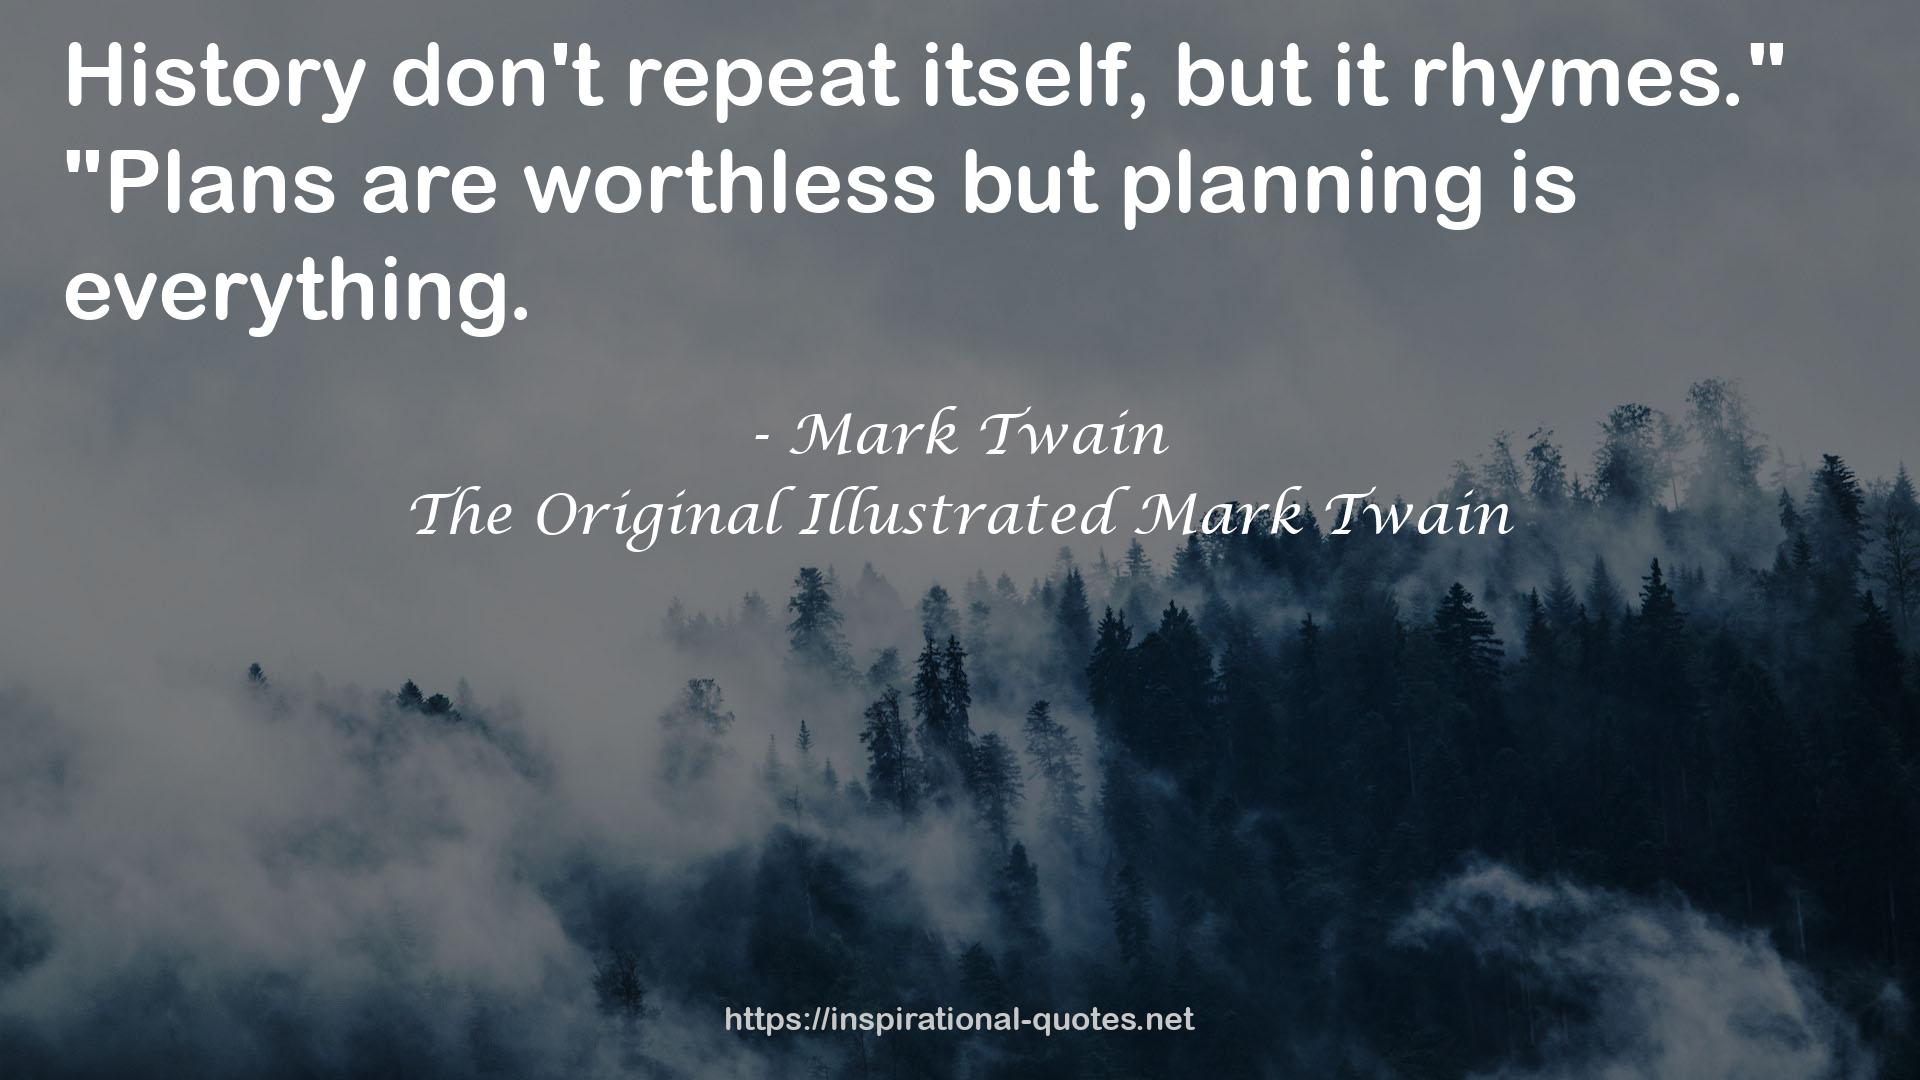 The Original Illustrated Mark Twain QUOTES